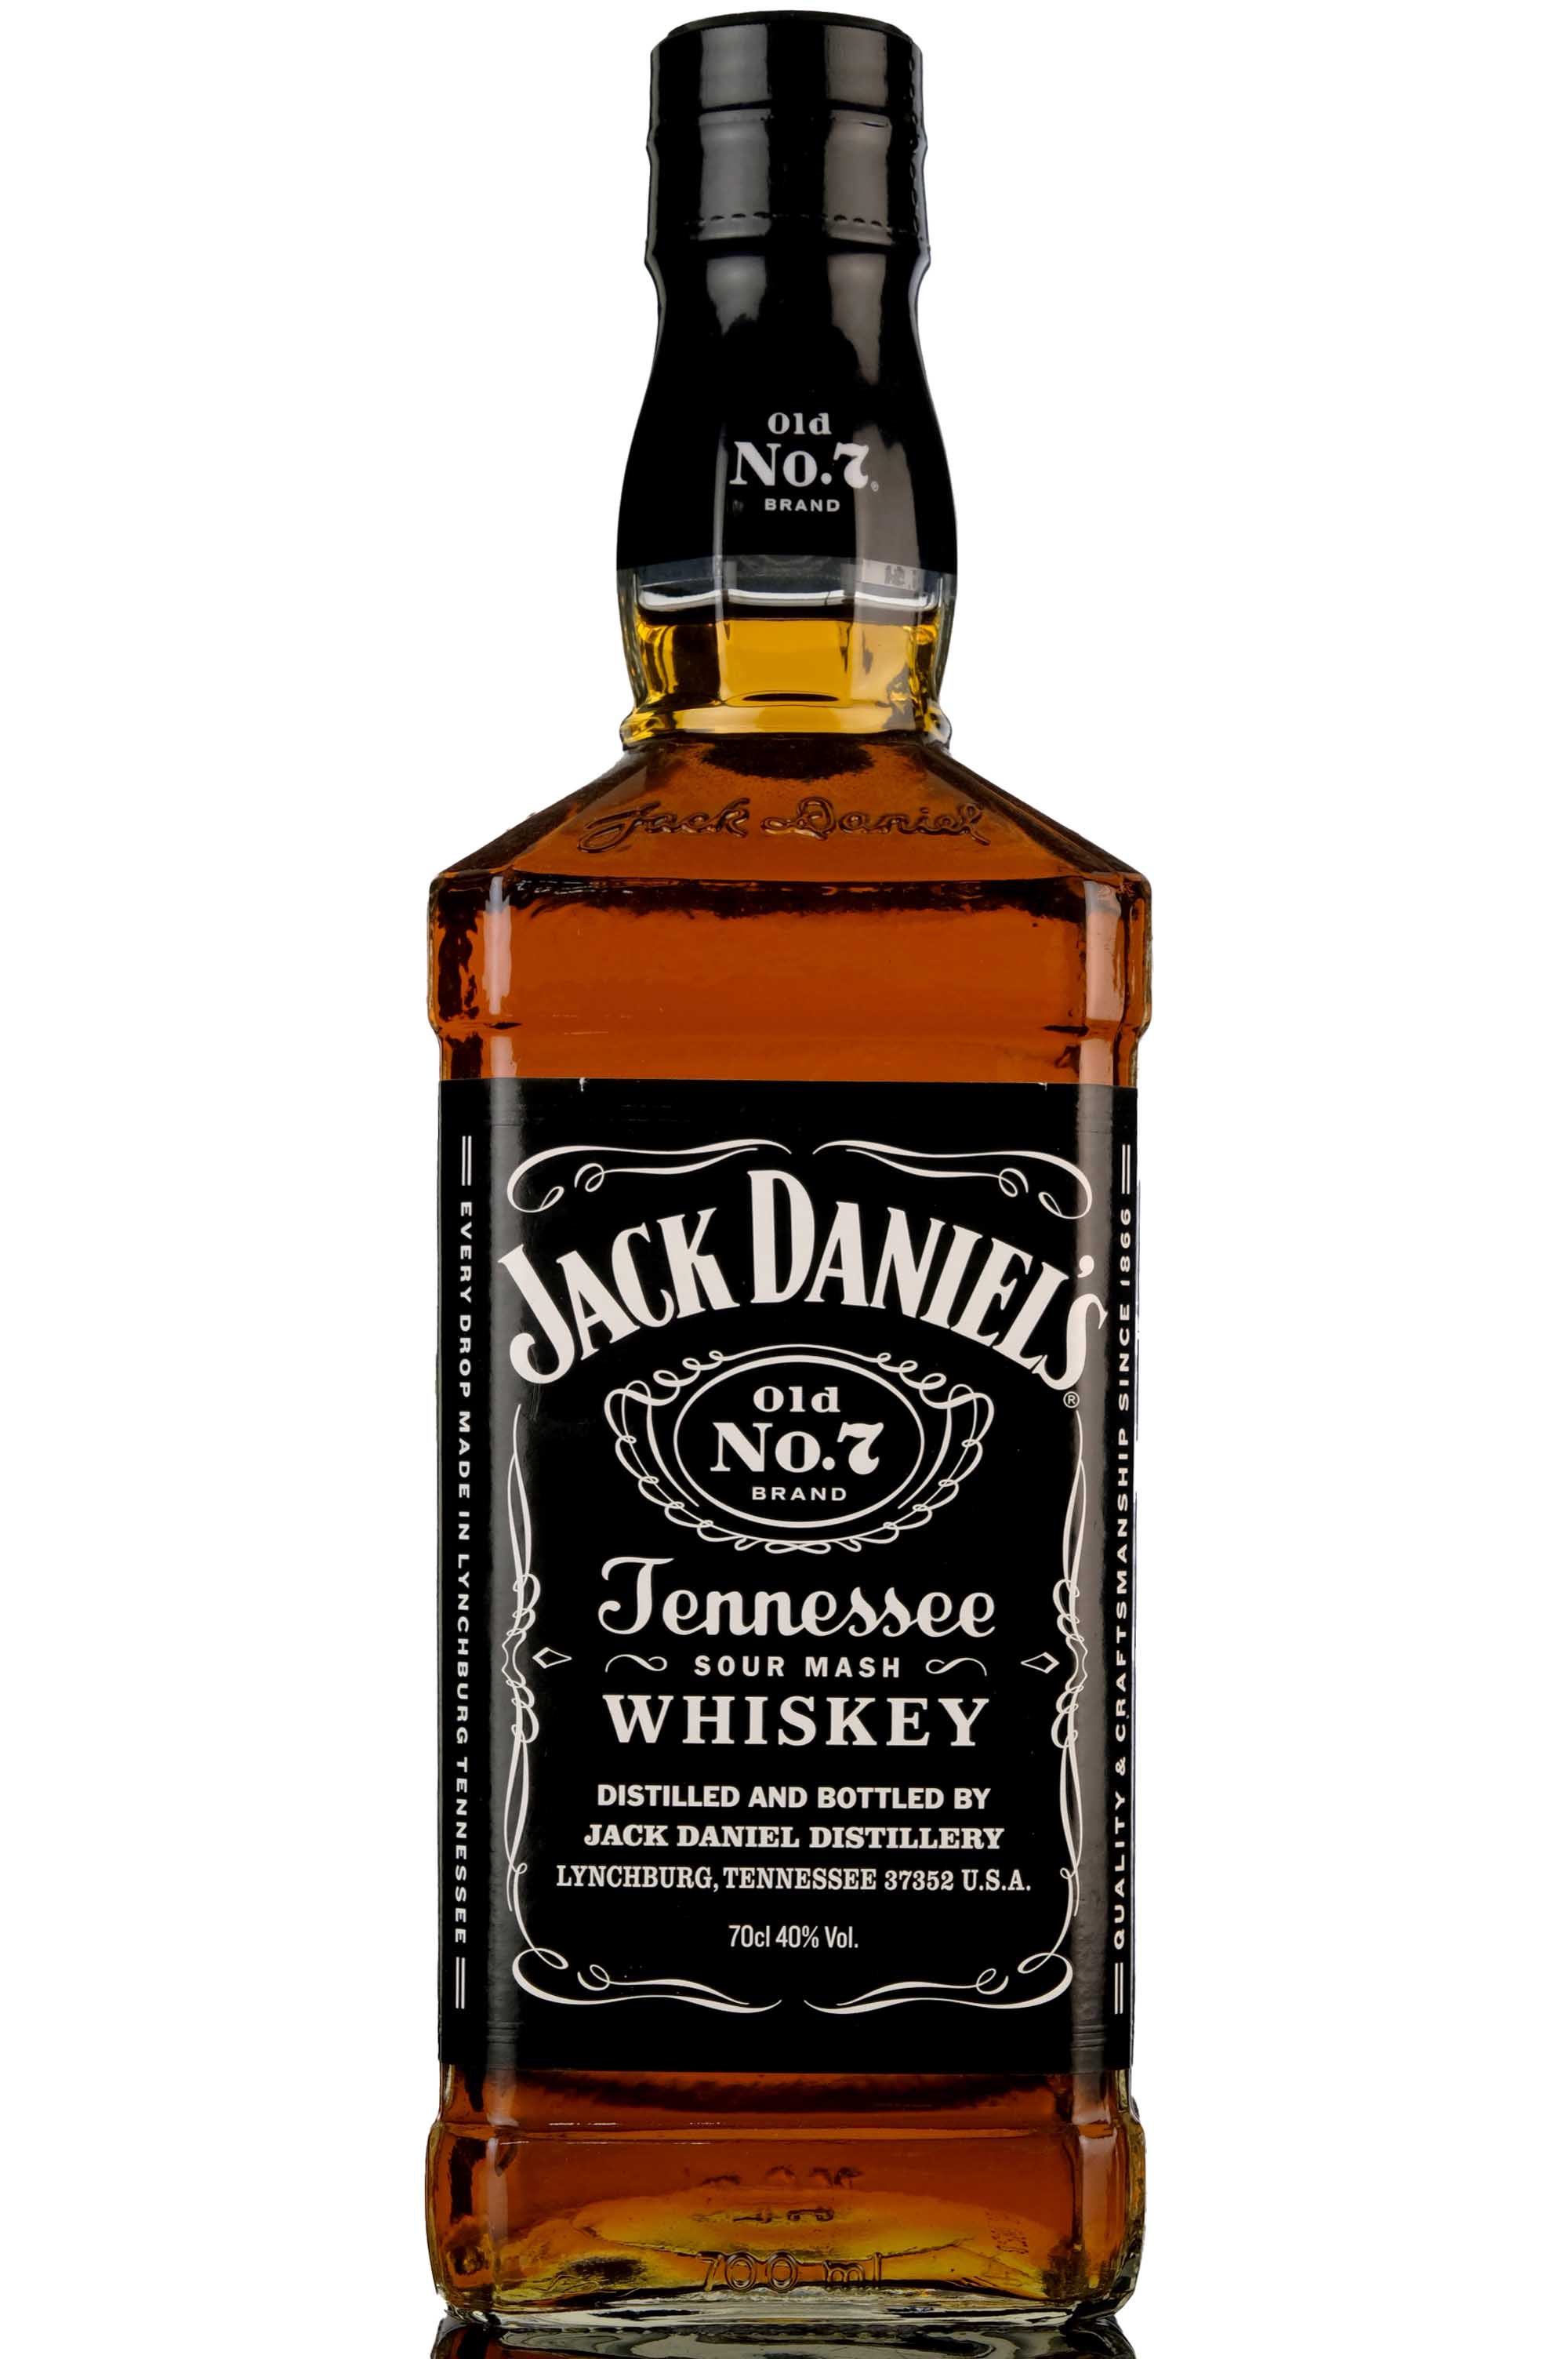 Jack Daniels Old No.7 Brand